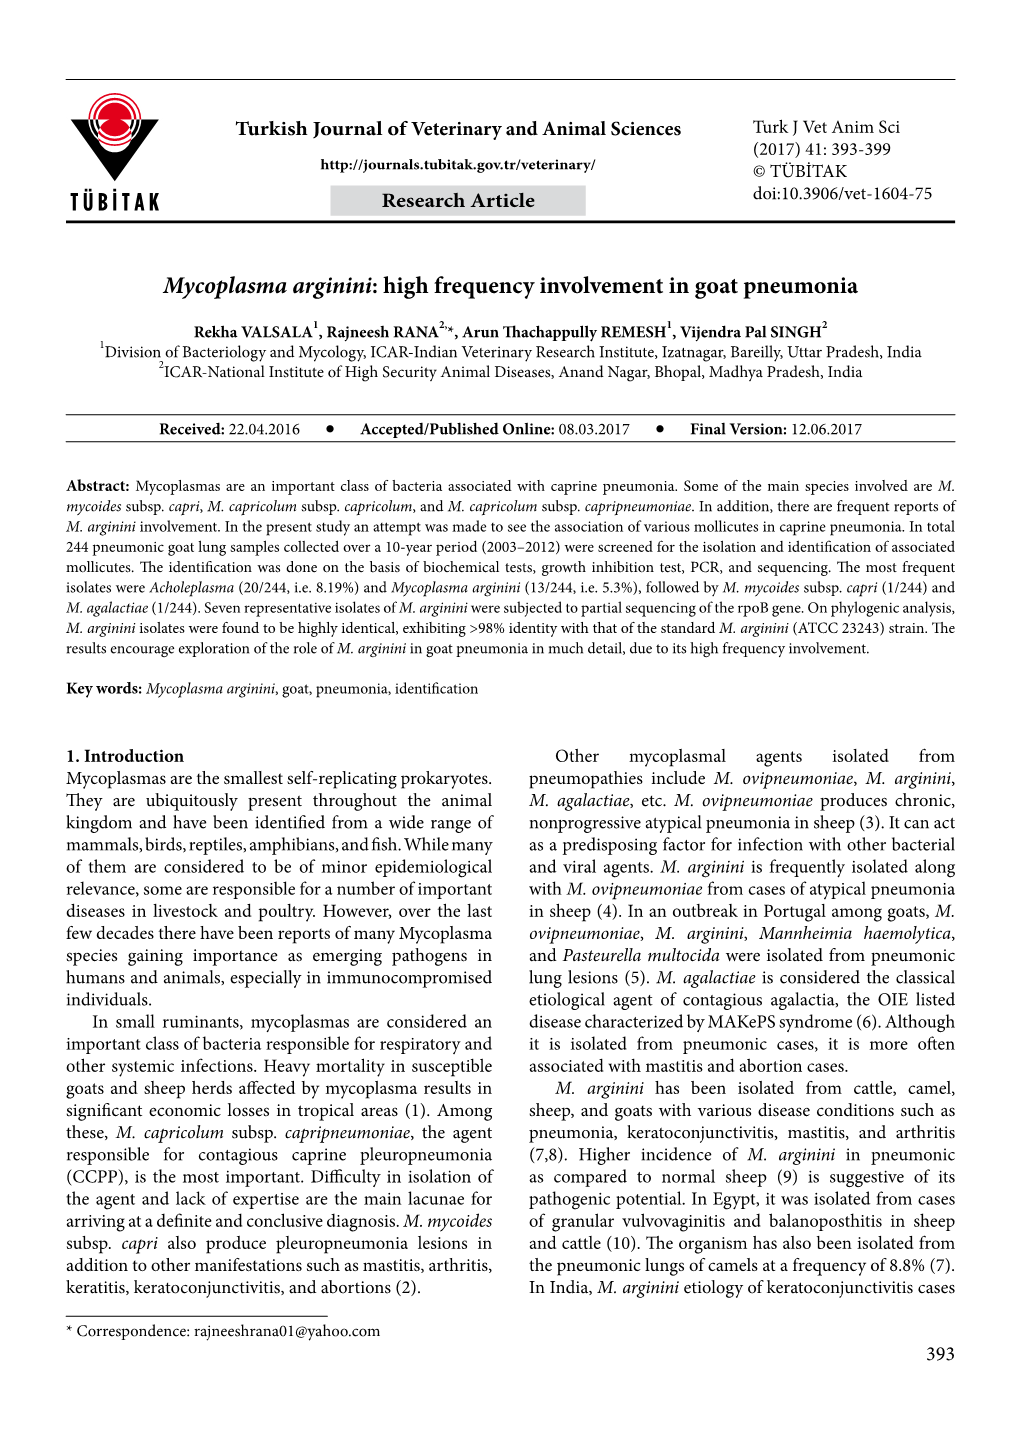 Mycoplasma Arginini: High Frequency Involvement in Goat Pneumonia